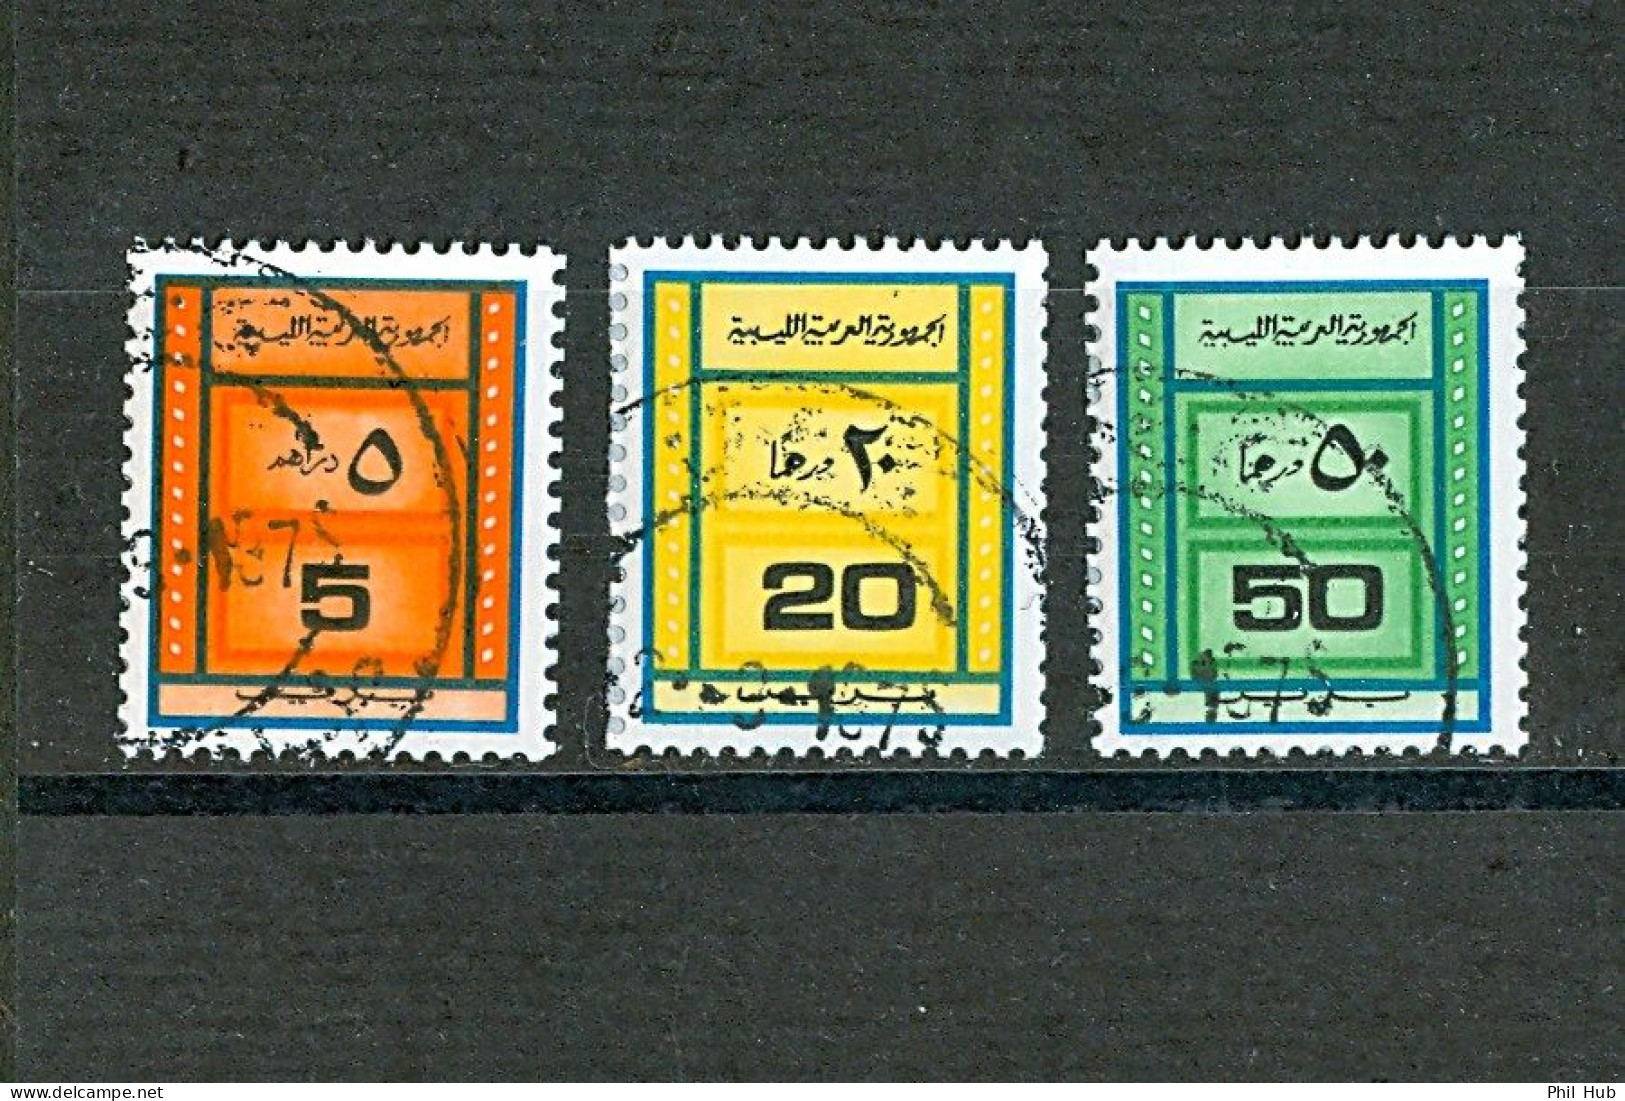 LIBYA 1975 Coil Stamps Rouleau Rollenmarken (Fine Used PMK) - Libia